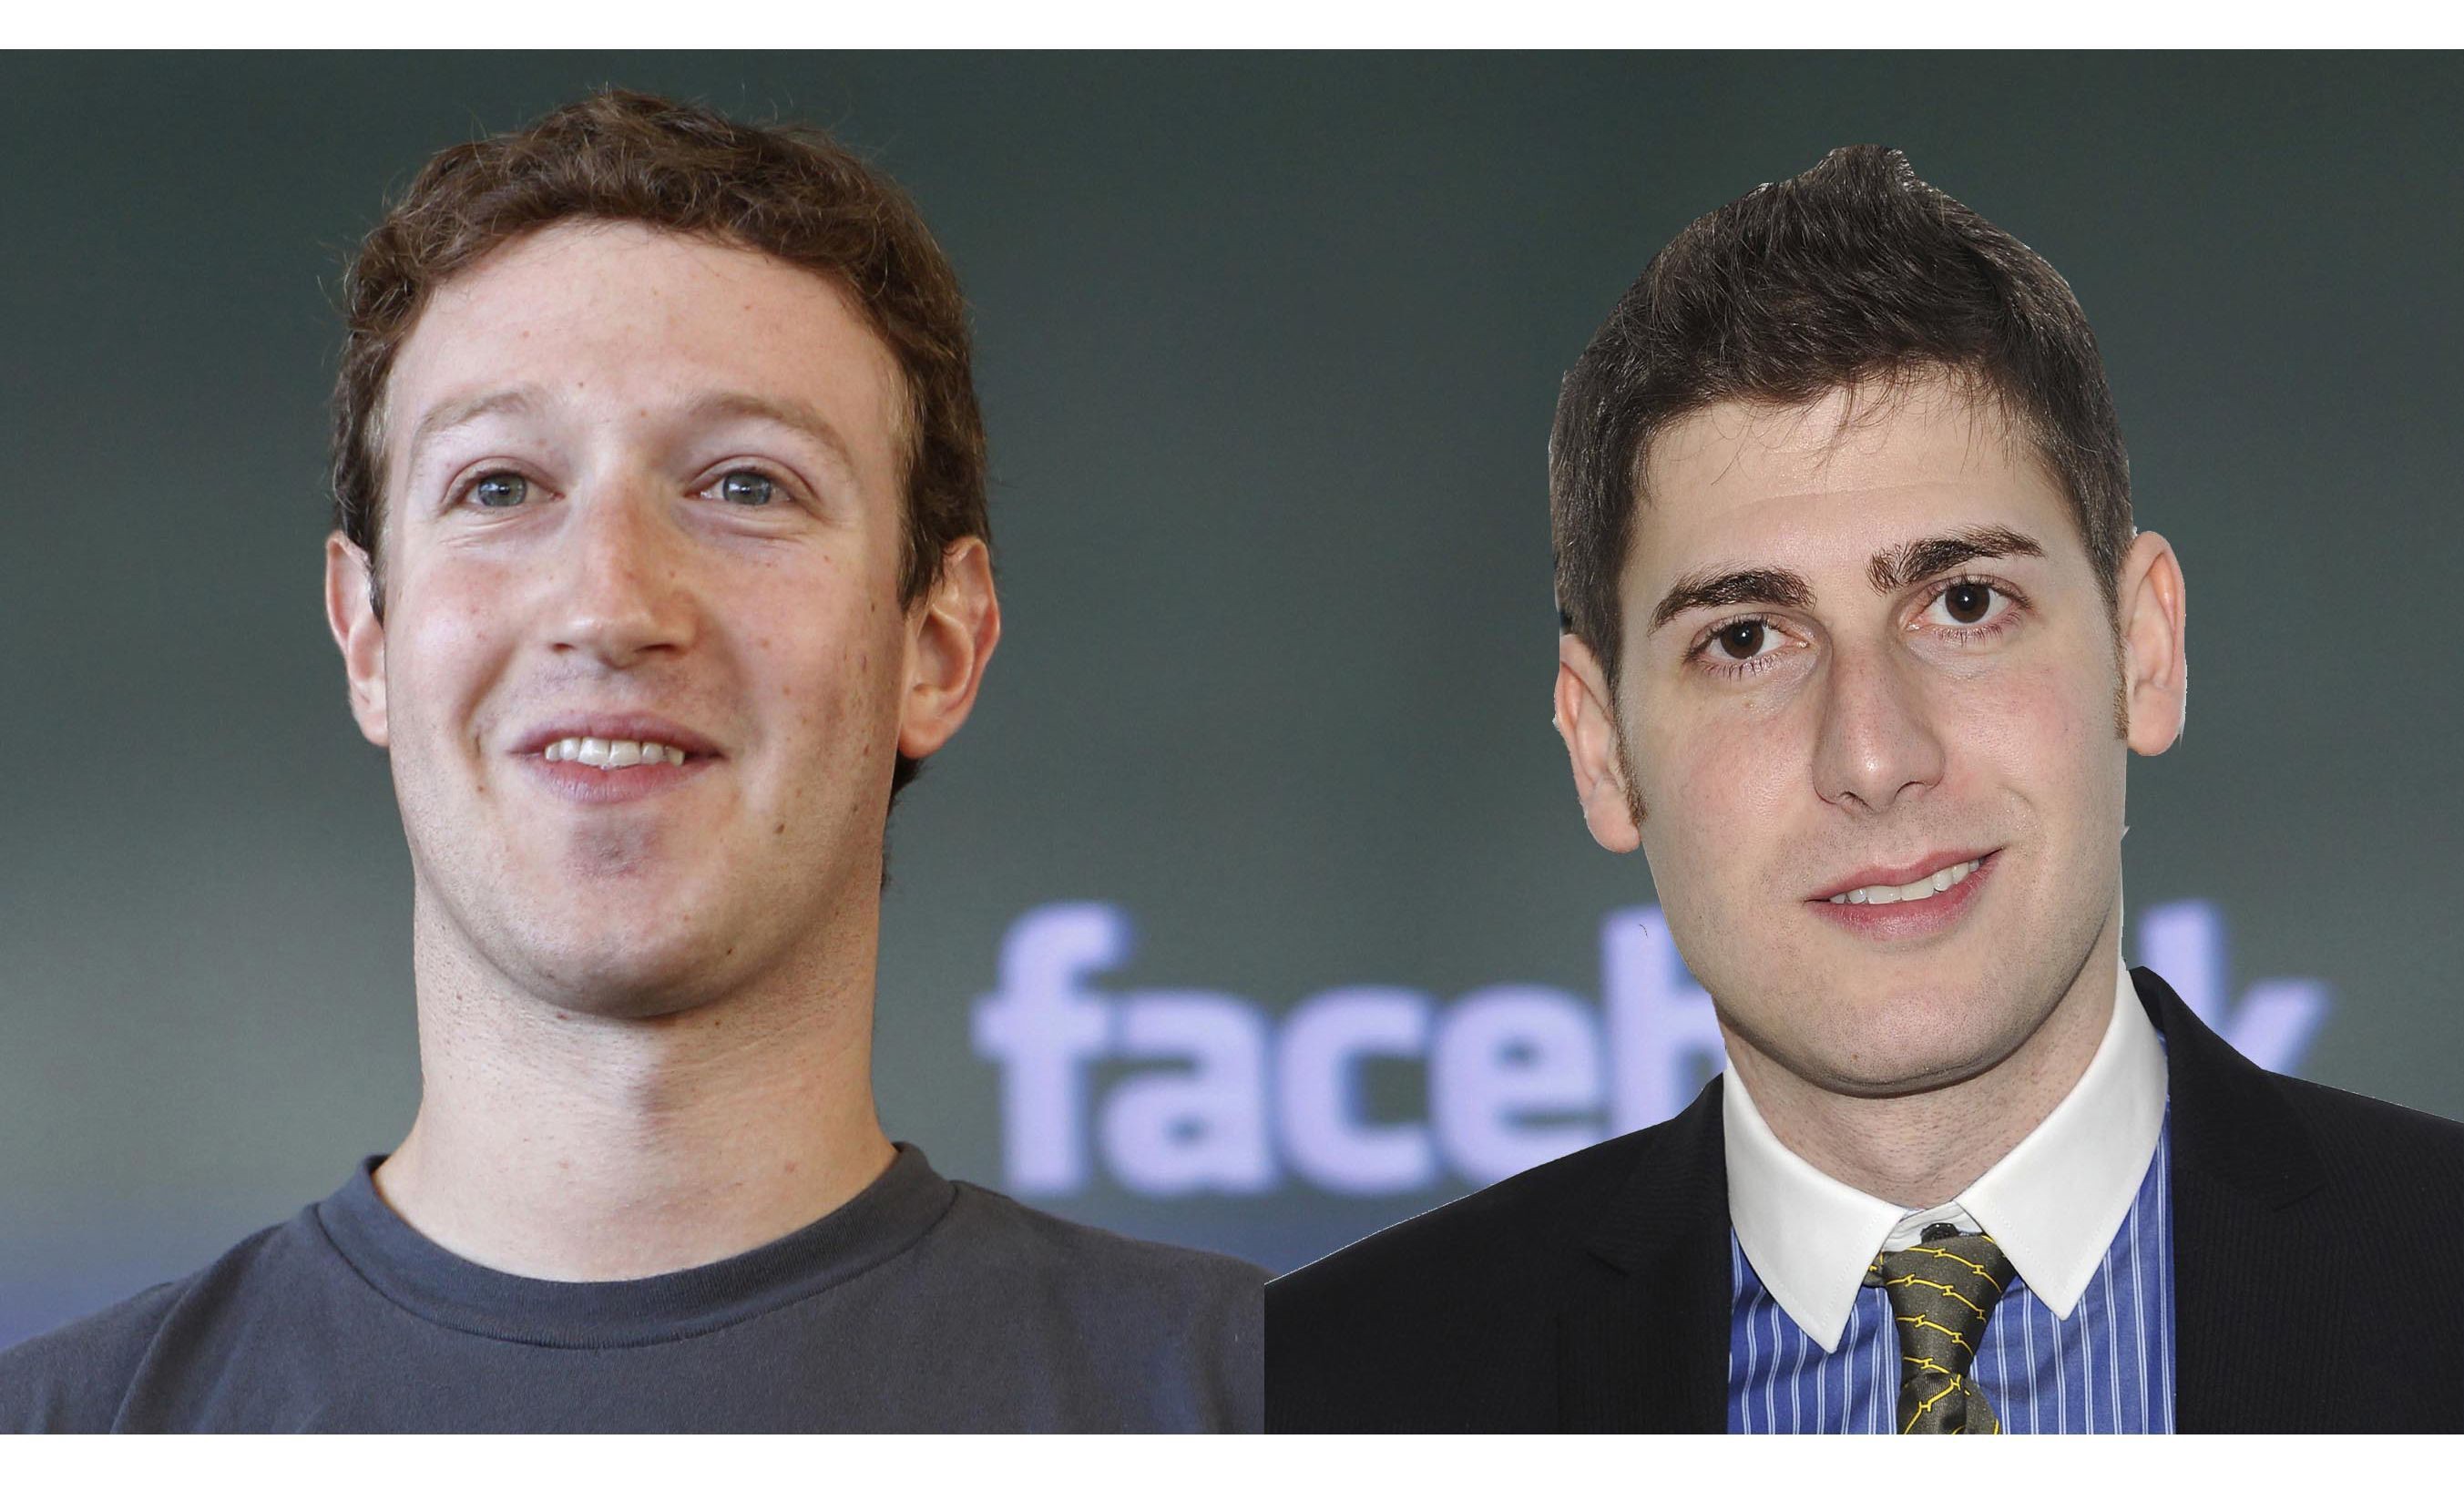 The Friendship between Mark Zuckerberg and Eduardo Saverin 911 WeKnow